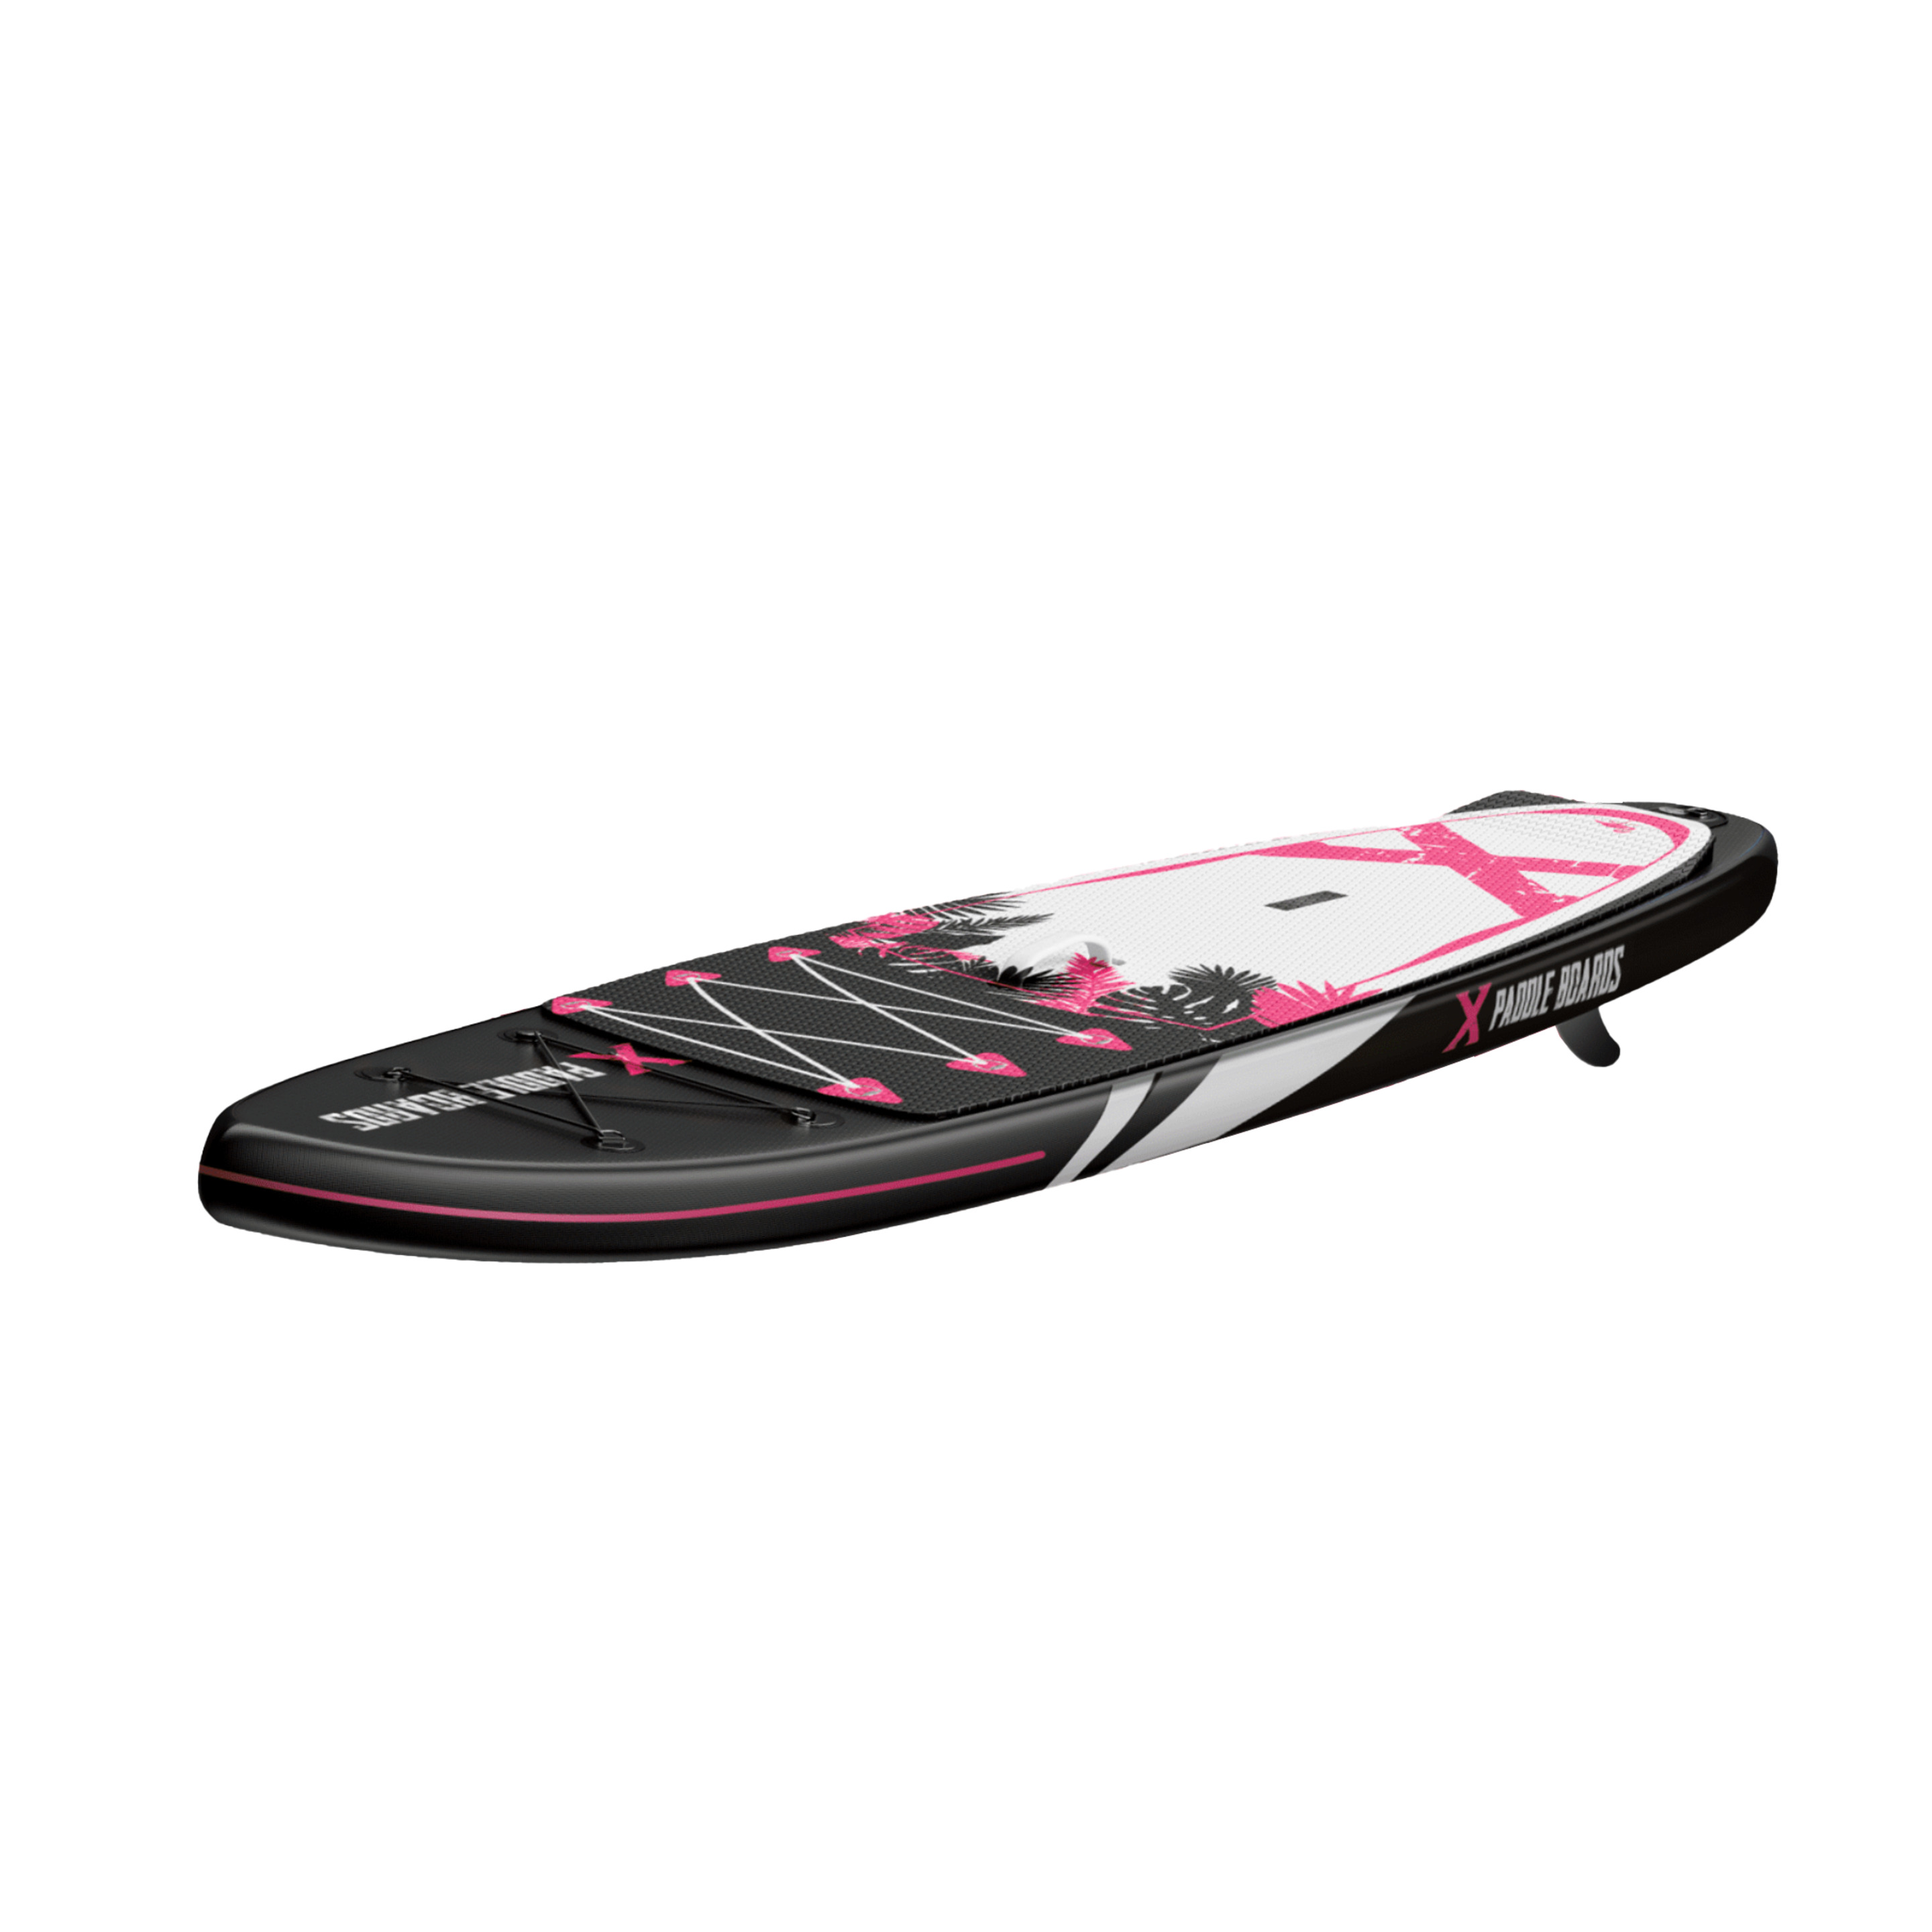 Tabla De Paddle Surf Hinchable  X-flamingo  310 X 82 X 15cm - Negro/Rosa  MKP